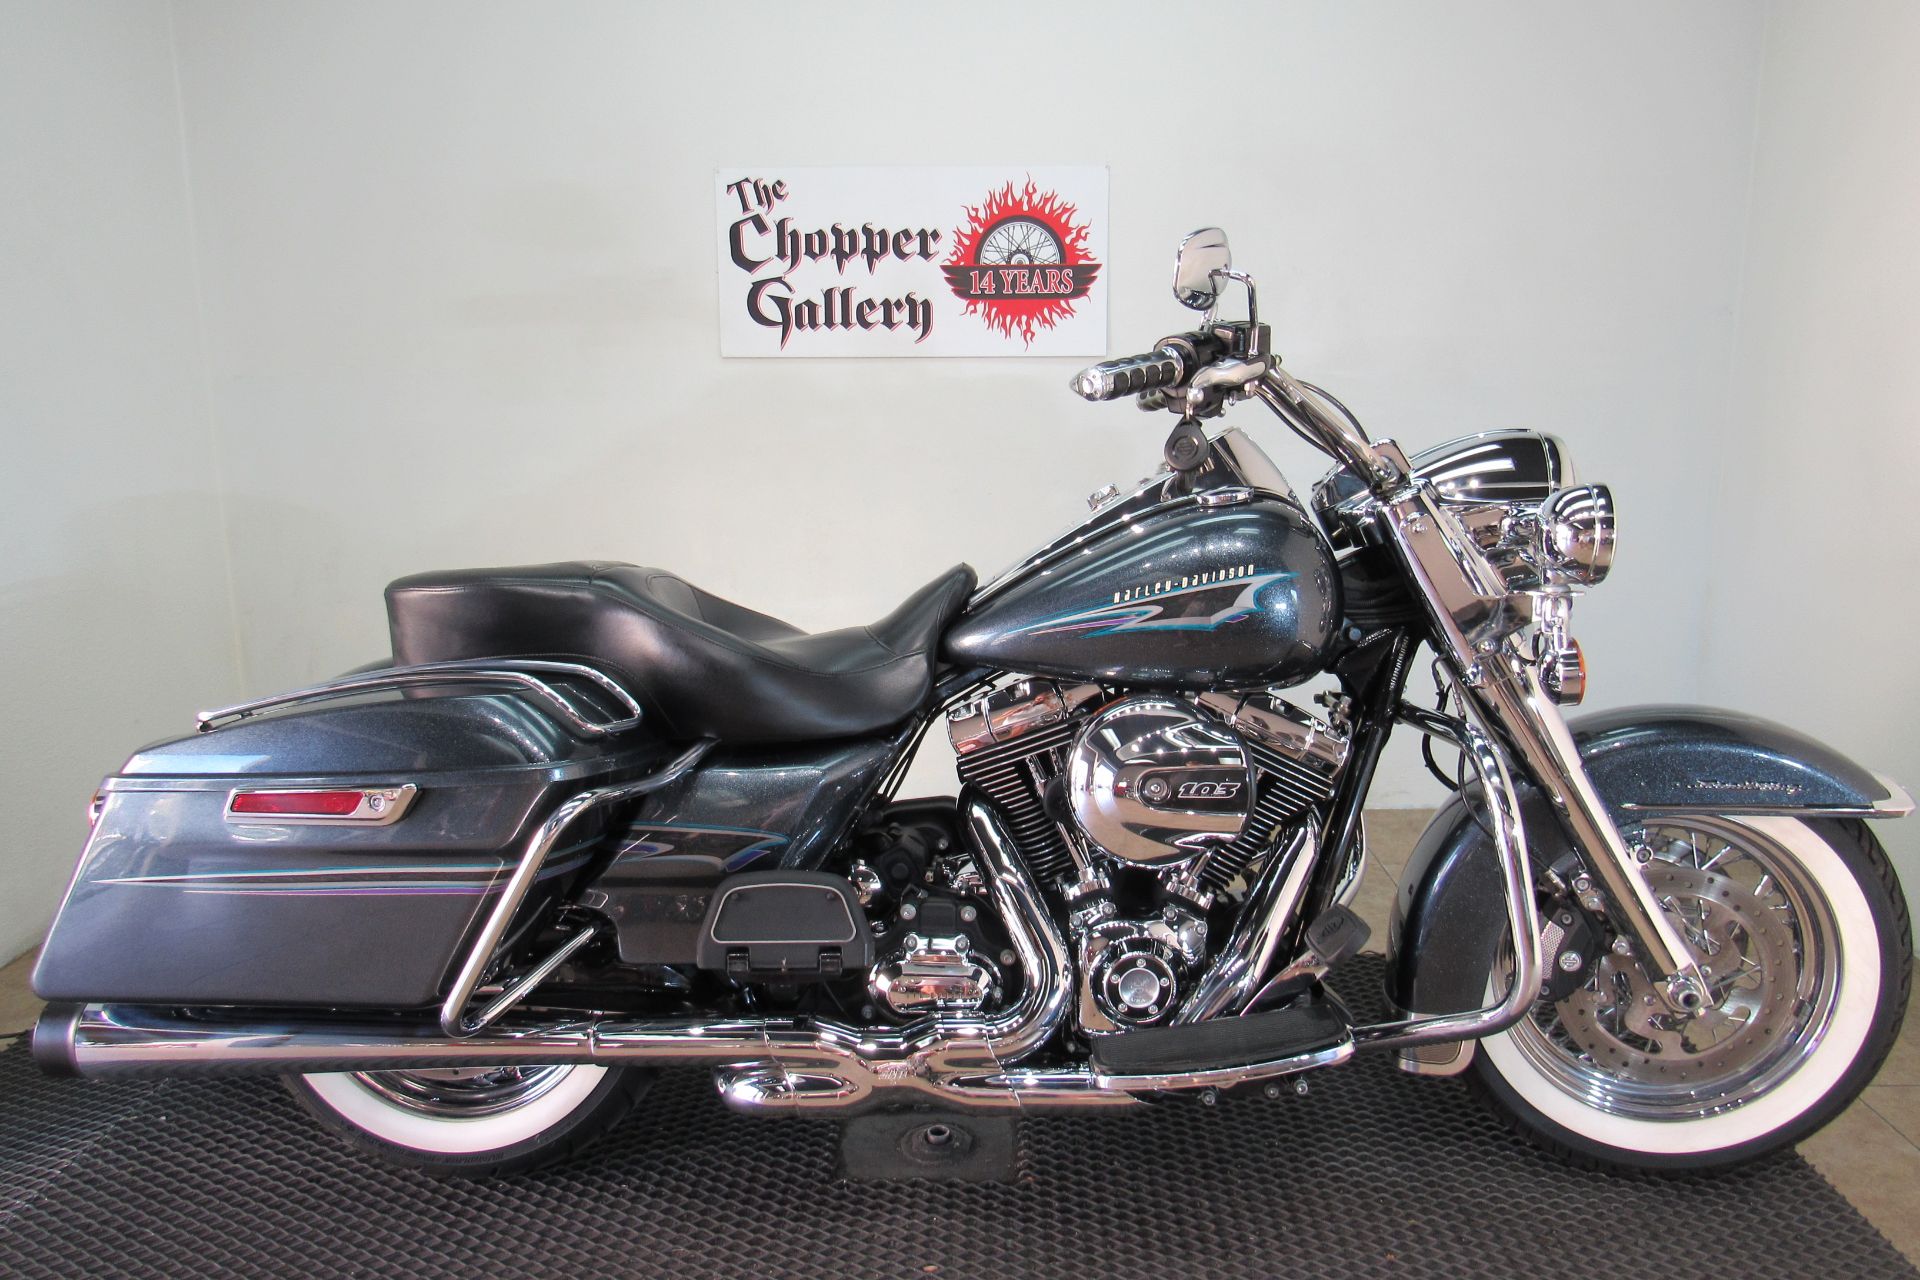 2015 Harley-Davidson Road King® in Temecula, California - Photo 1